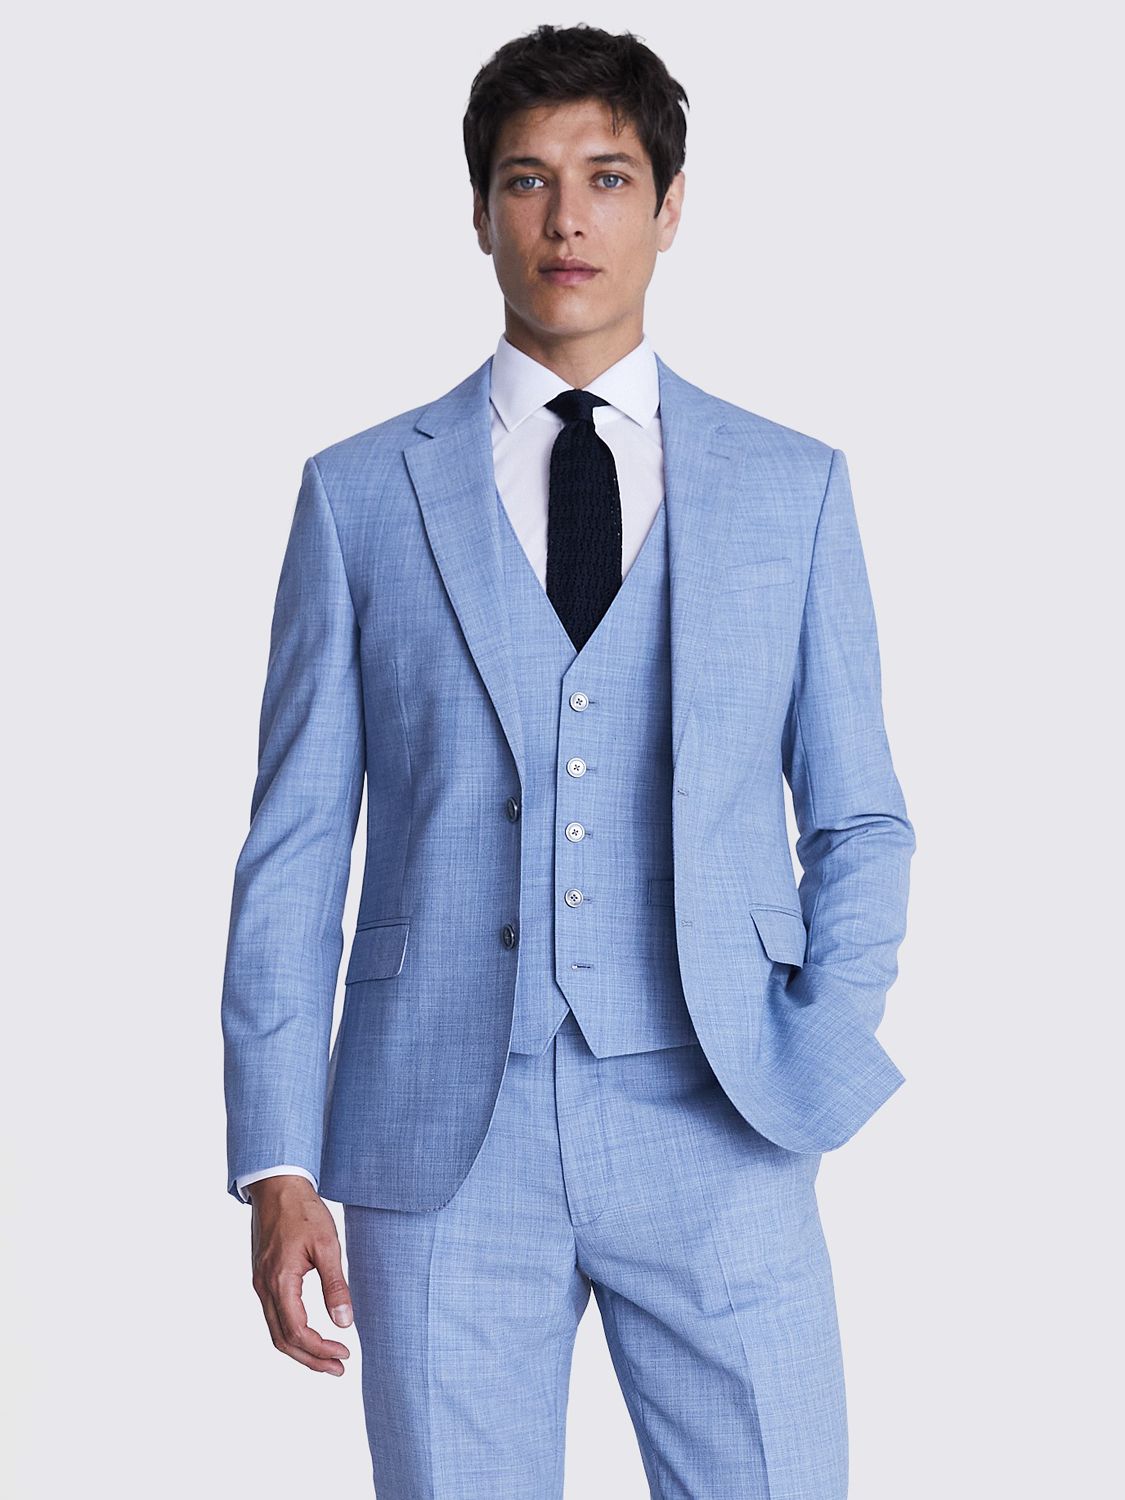 Men's Blue Suit, White Print Long Sleeve Shirt, Tan Leather Brogue